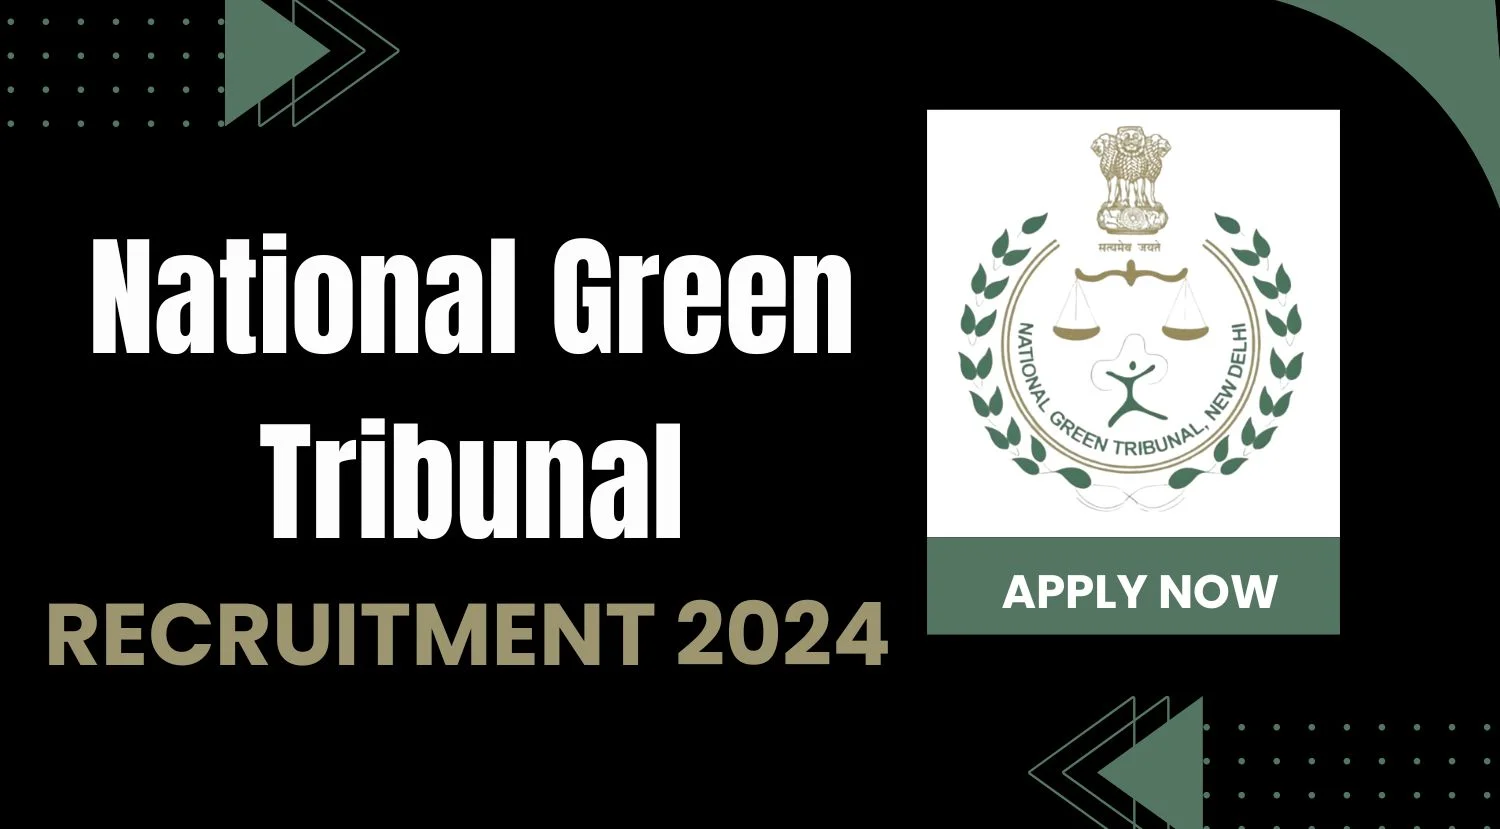 National Green Tribunal Recruitment 2024